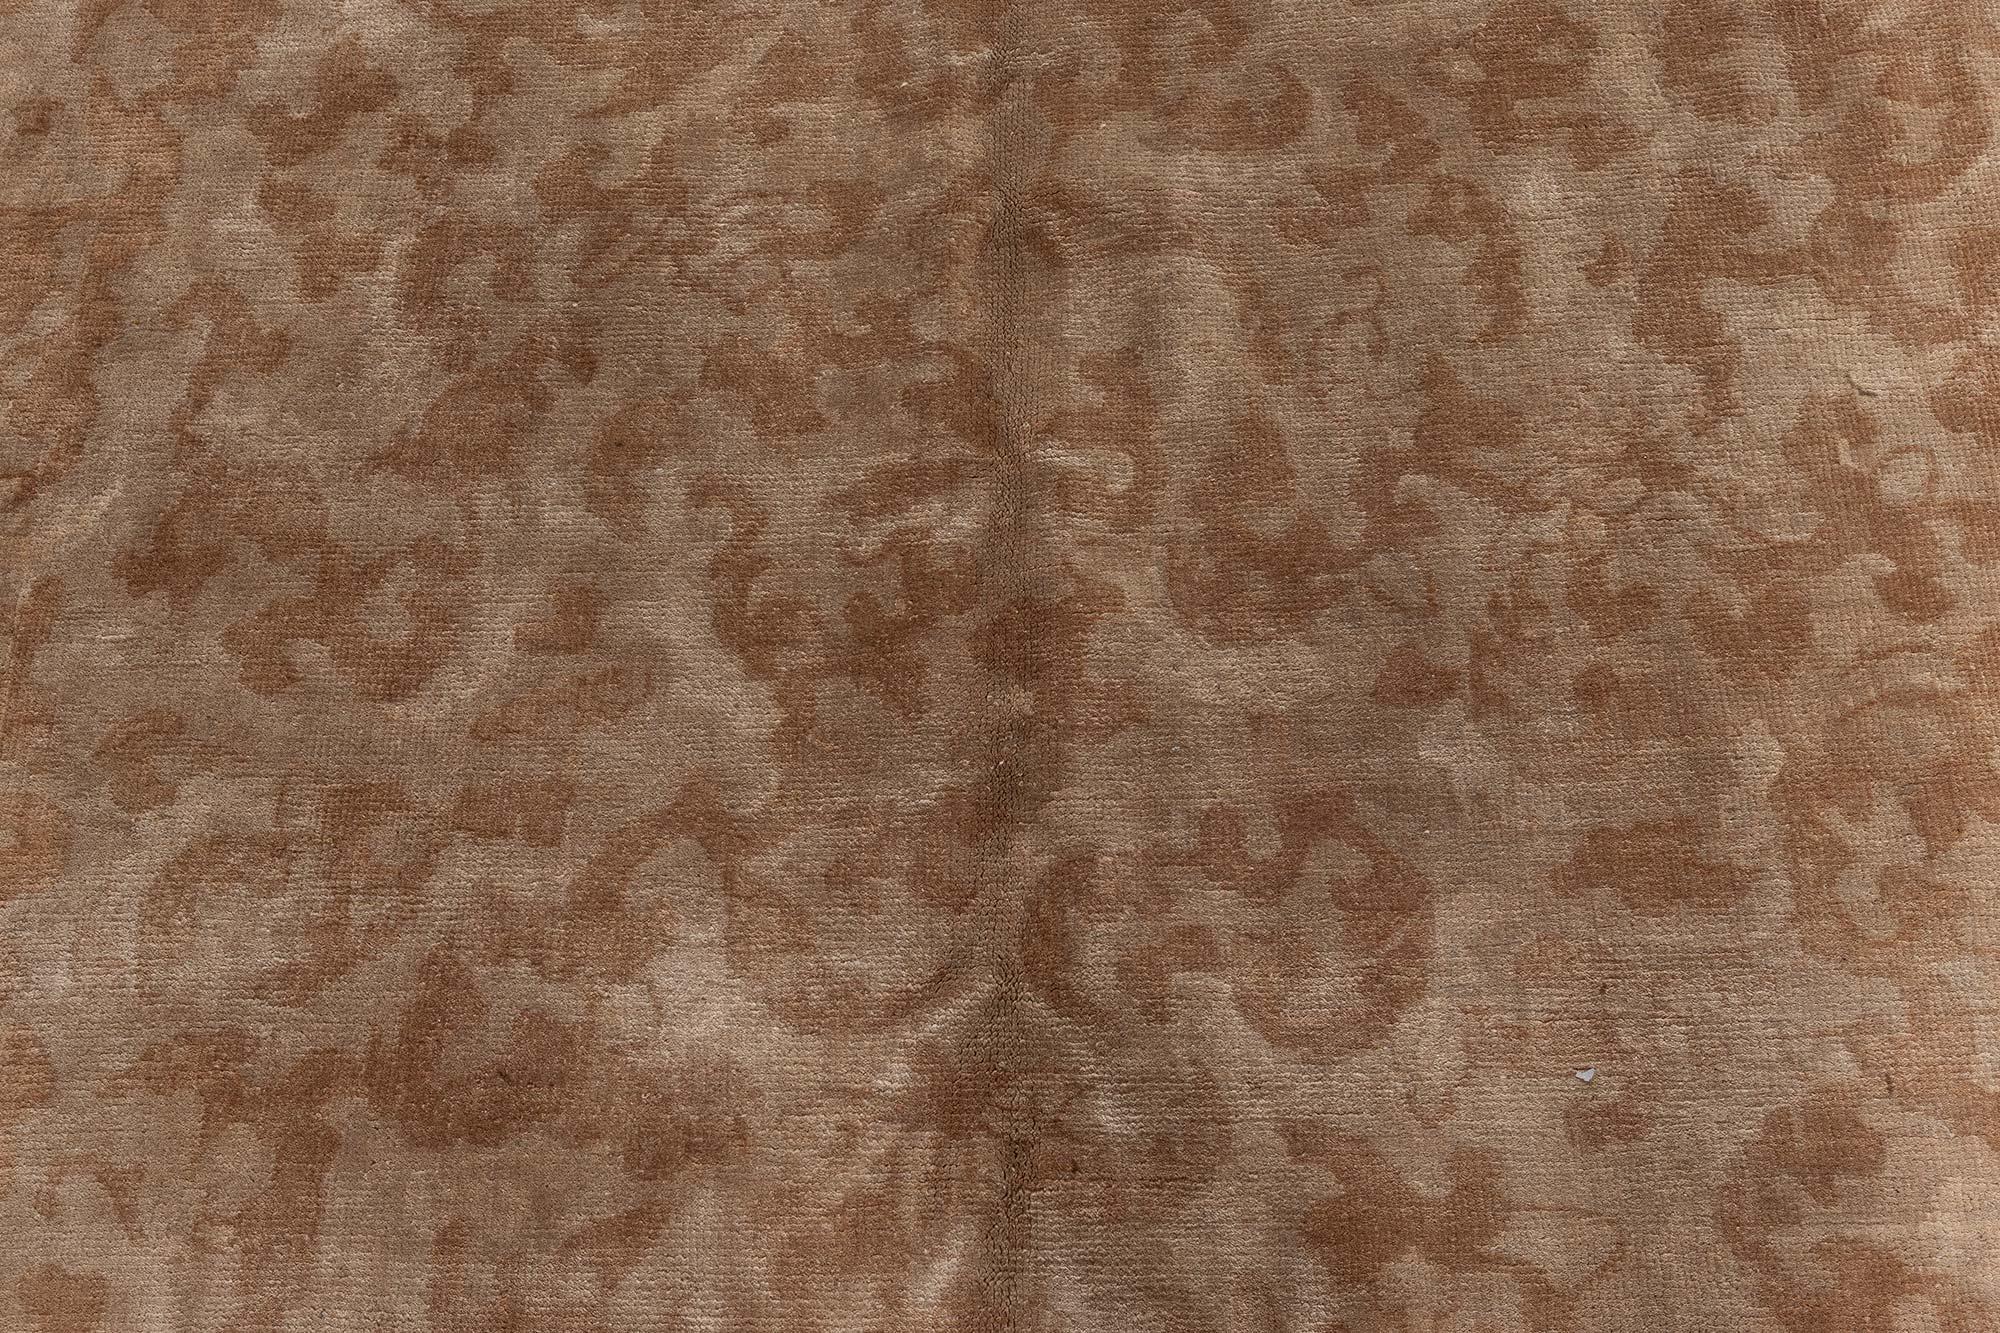 Midcentury Chinese brown handmade wool rug
Size: 10'10